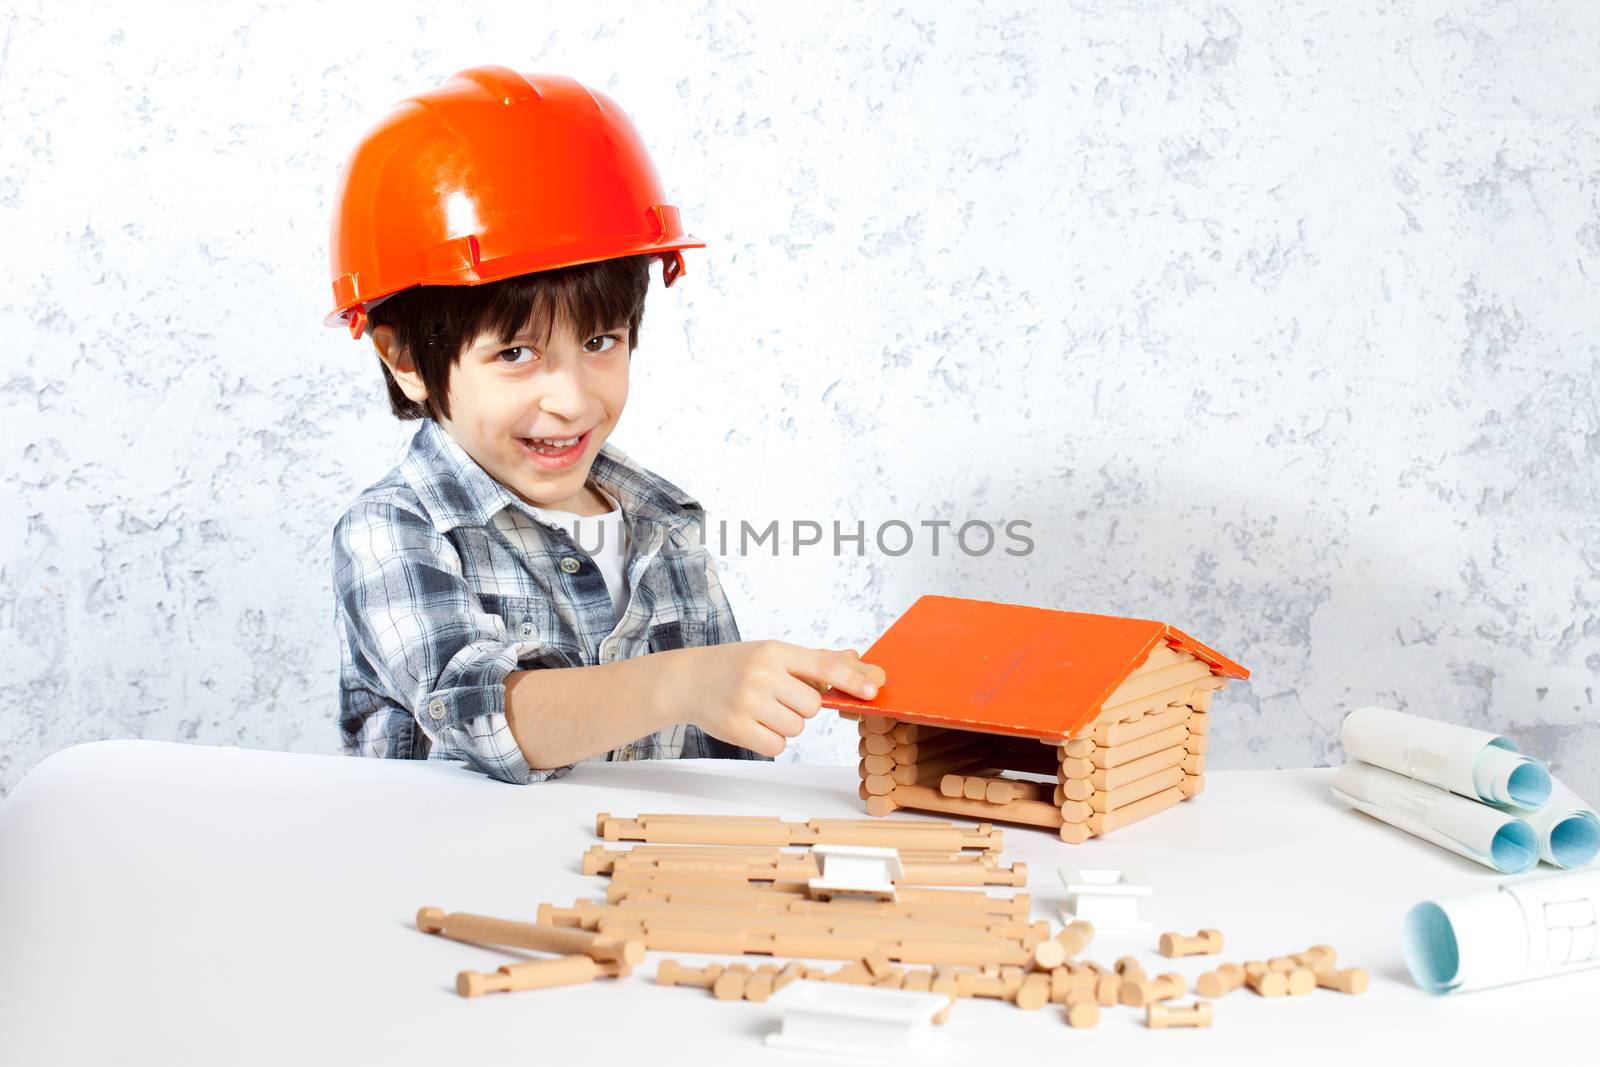 boy builder in red helmet  built a new home